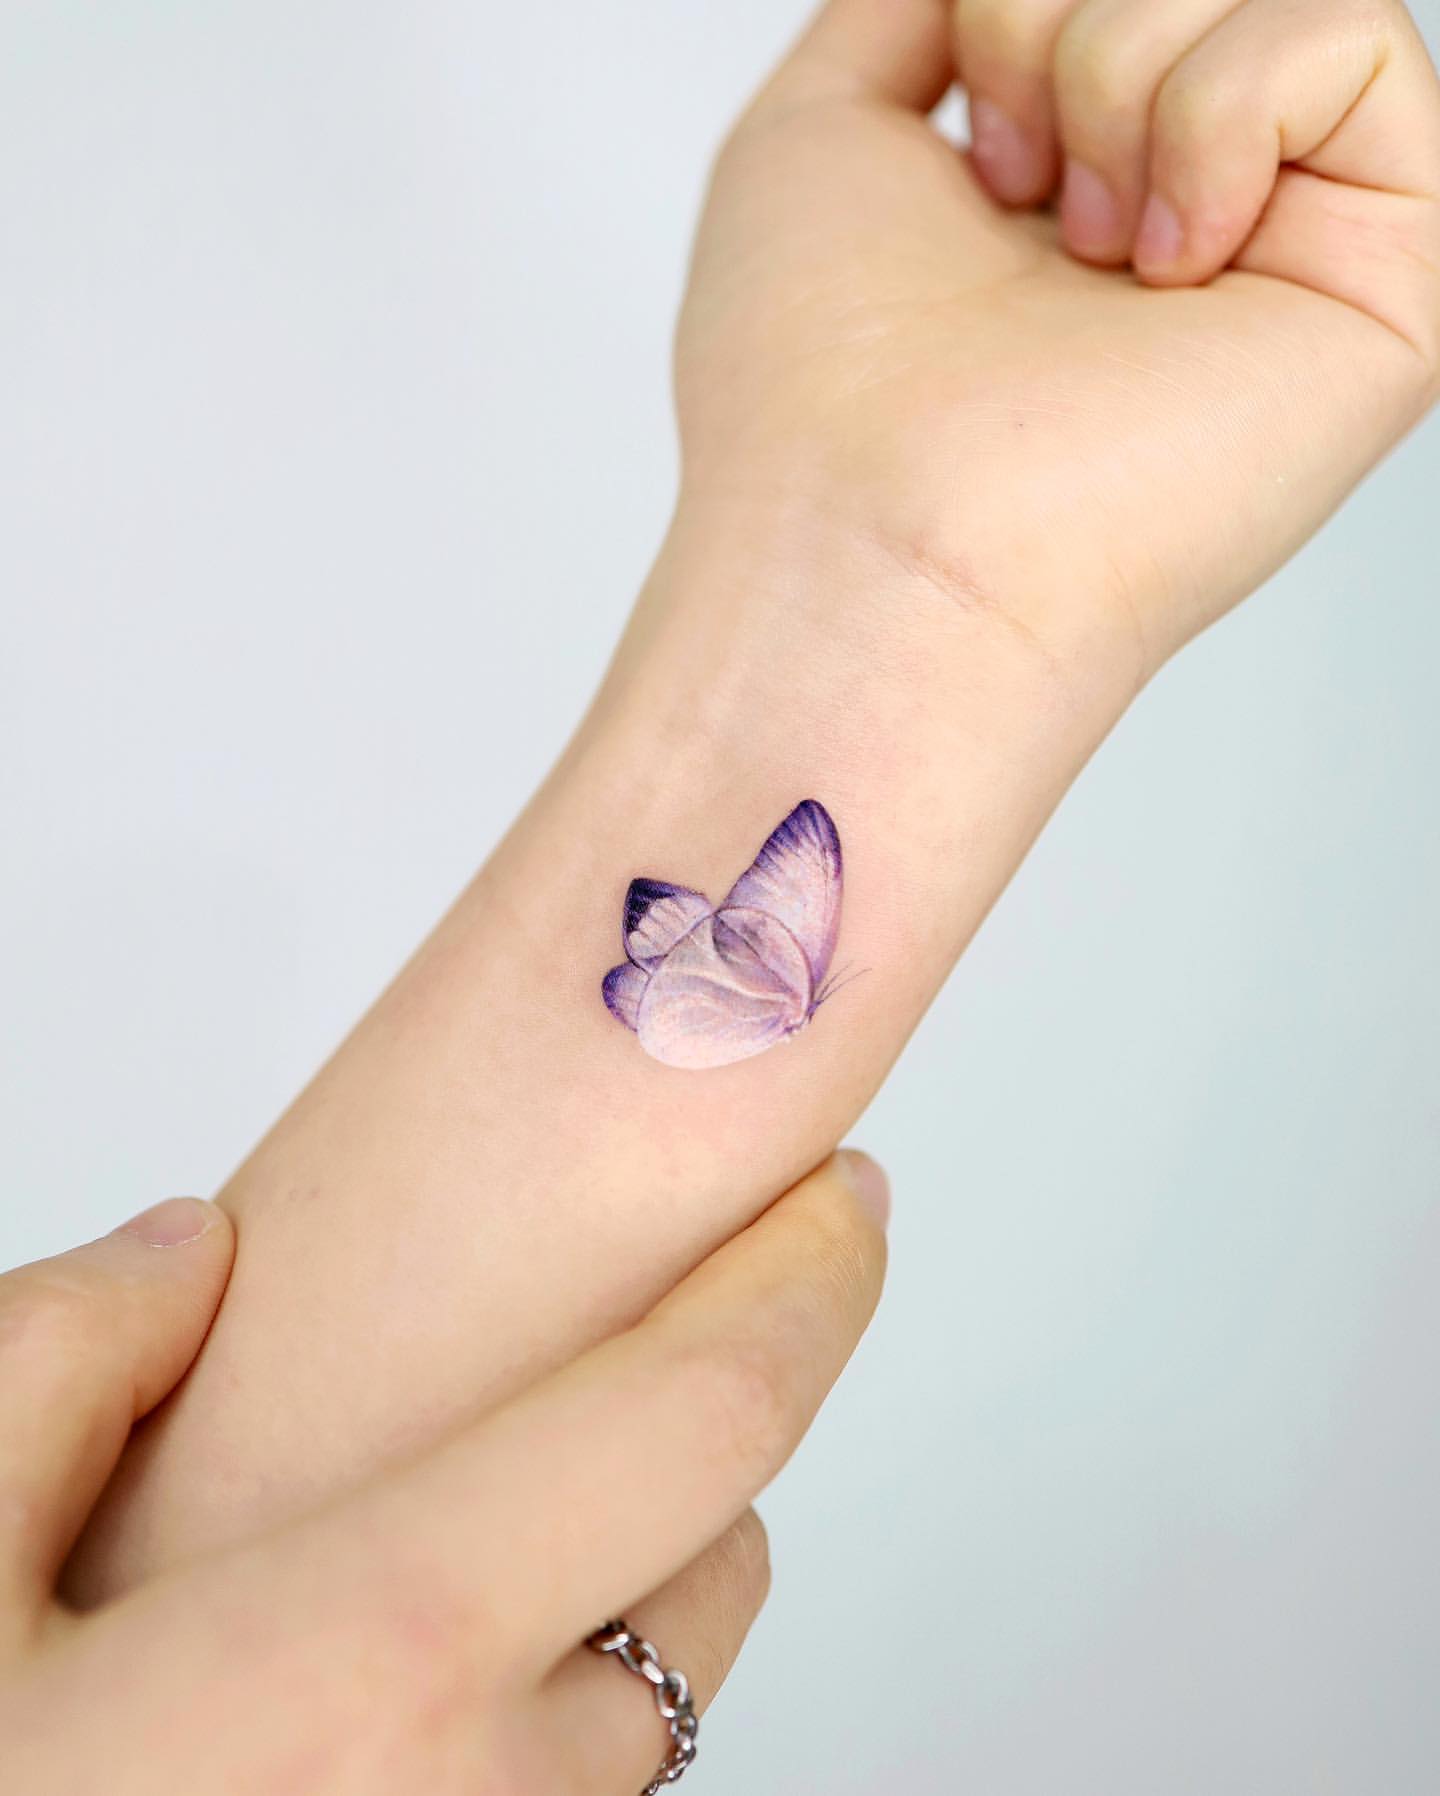 Wrist Tattoo Ideas for Women 64